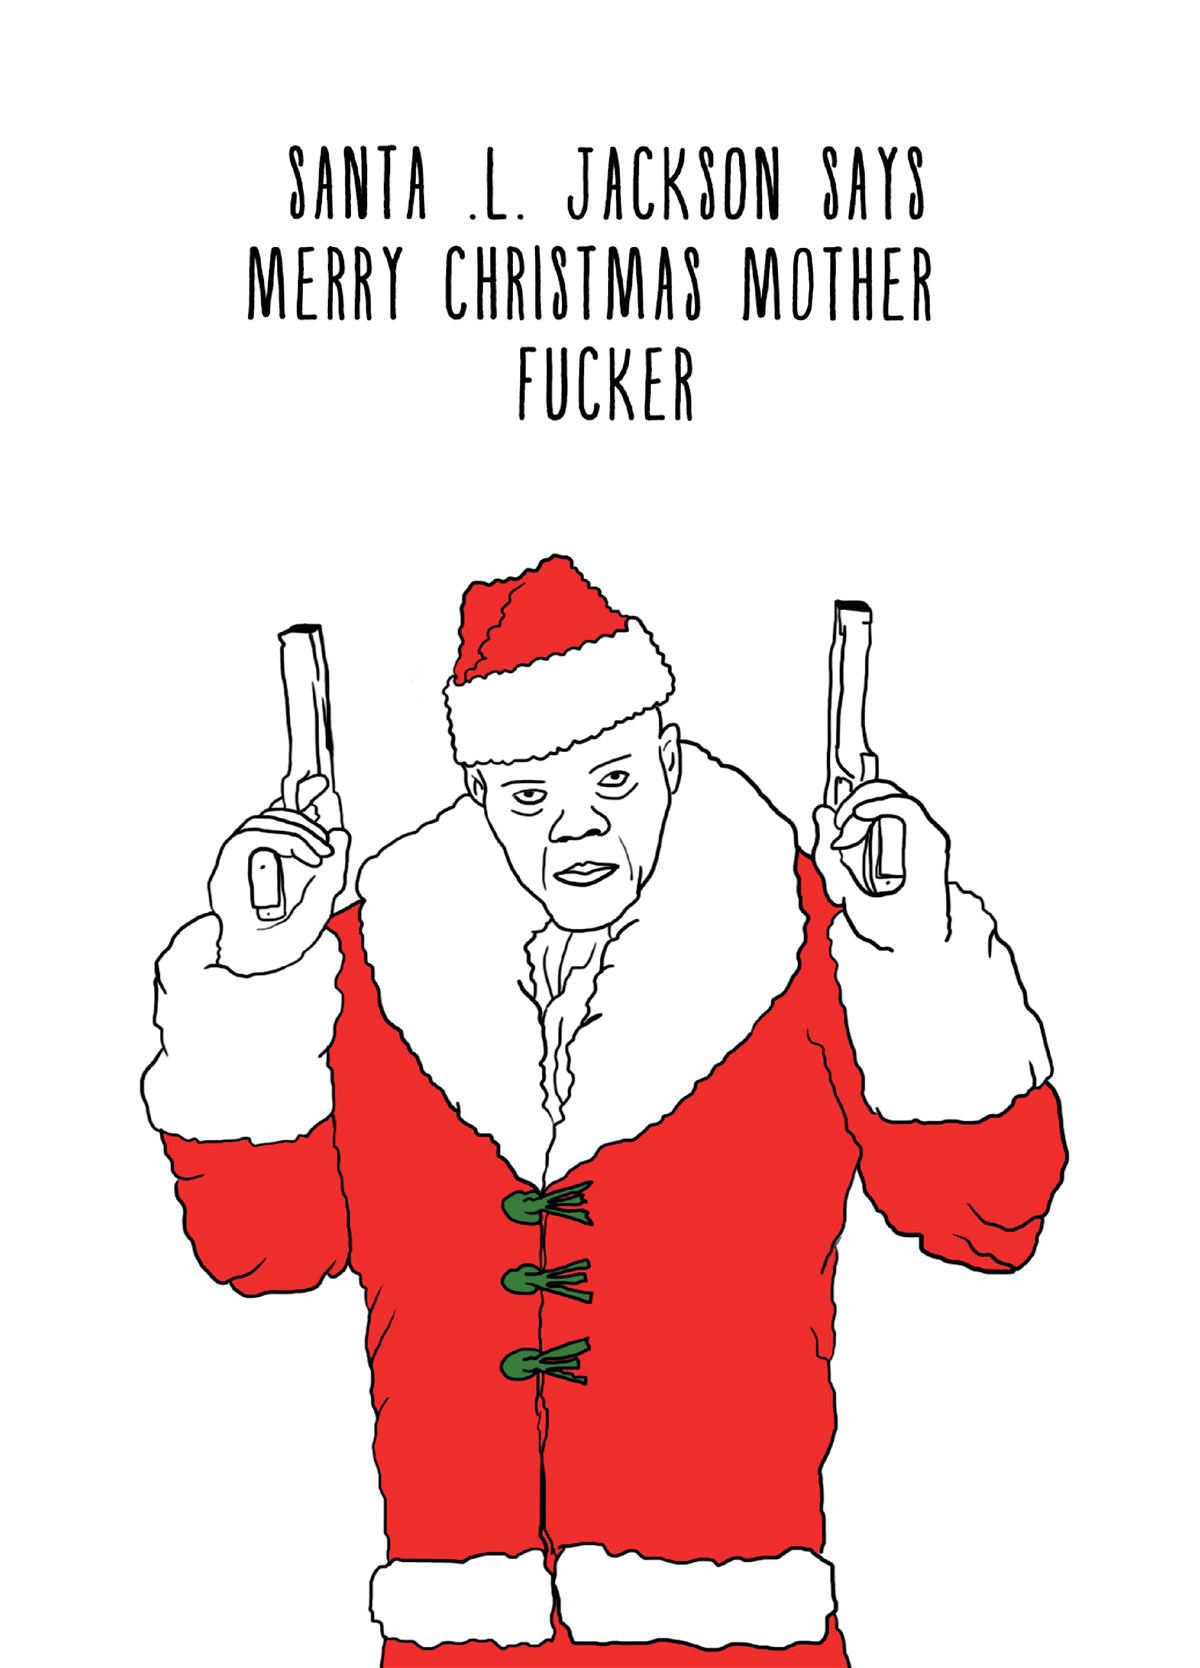 Merry Christmas Mother Fucker Card.